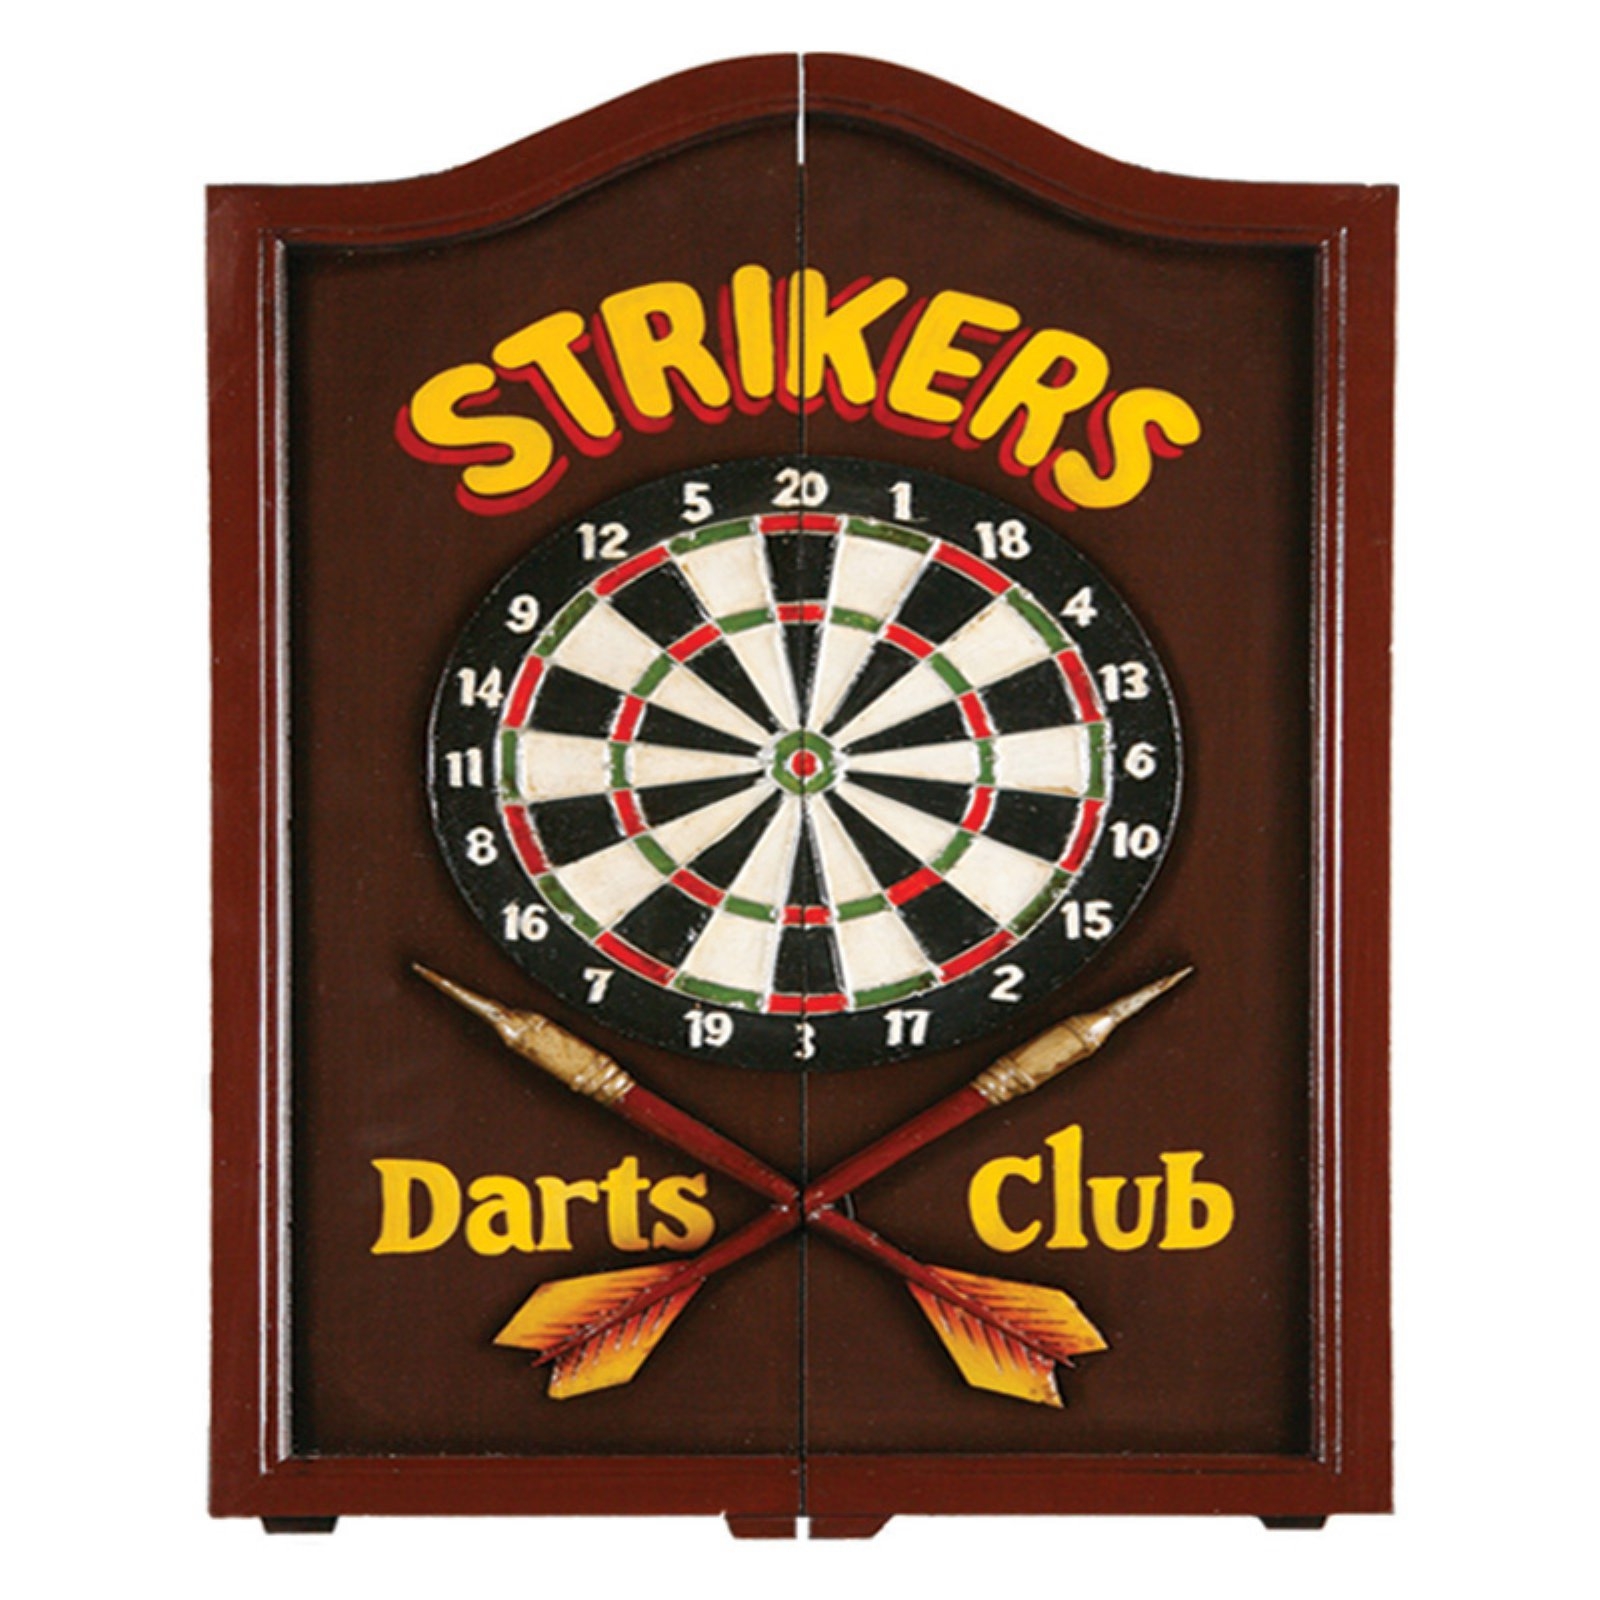 RAM Gameroom Products Dartboard Cabinet, "Strikers Darts Club"